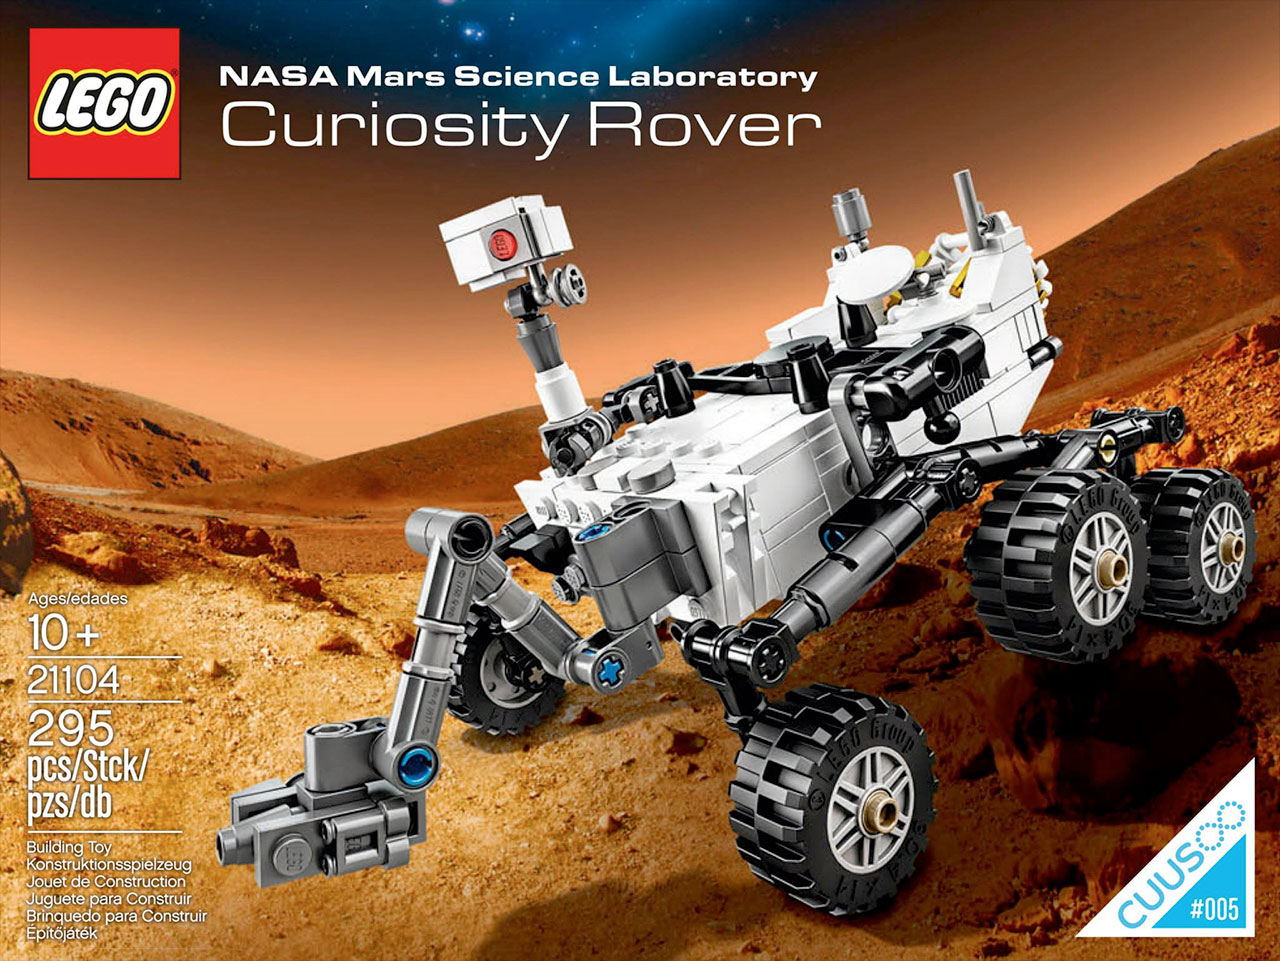 LEGO spacecraft: A brief history of historic accuracy